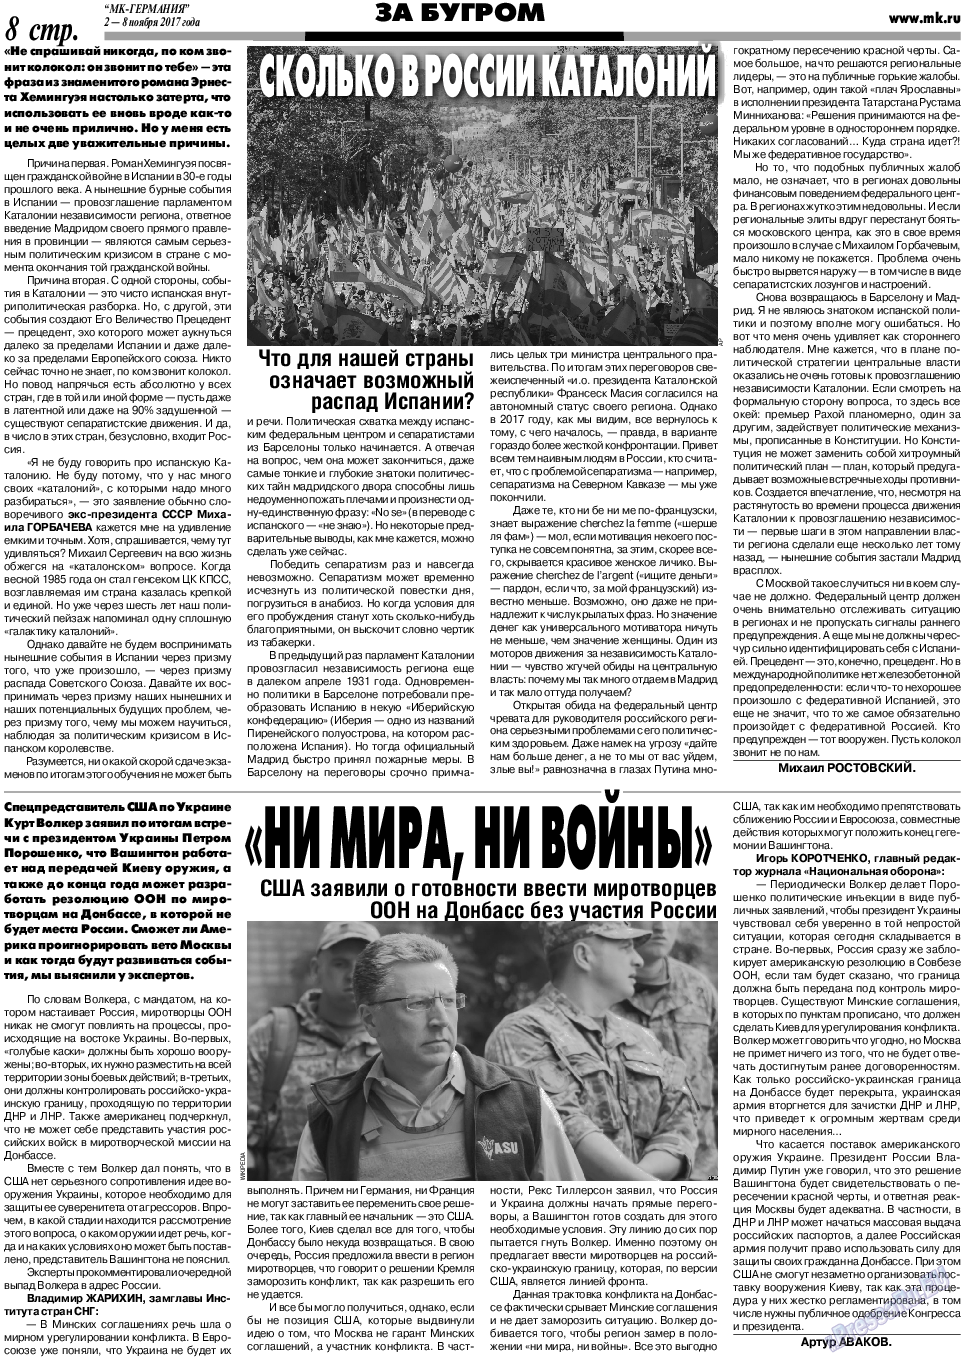 МК-Германия, газета. 2017 №45 стр.8